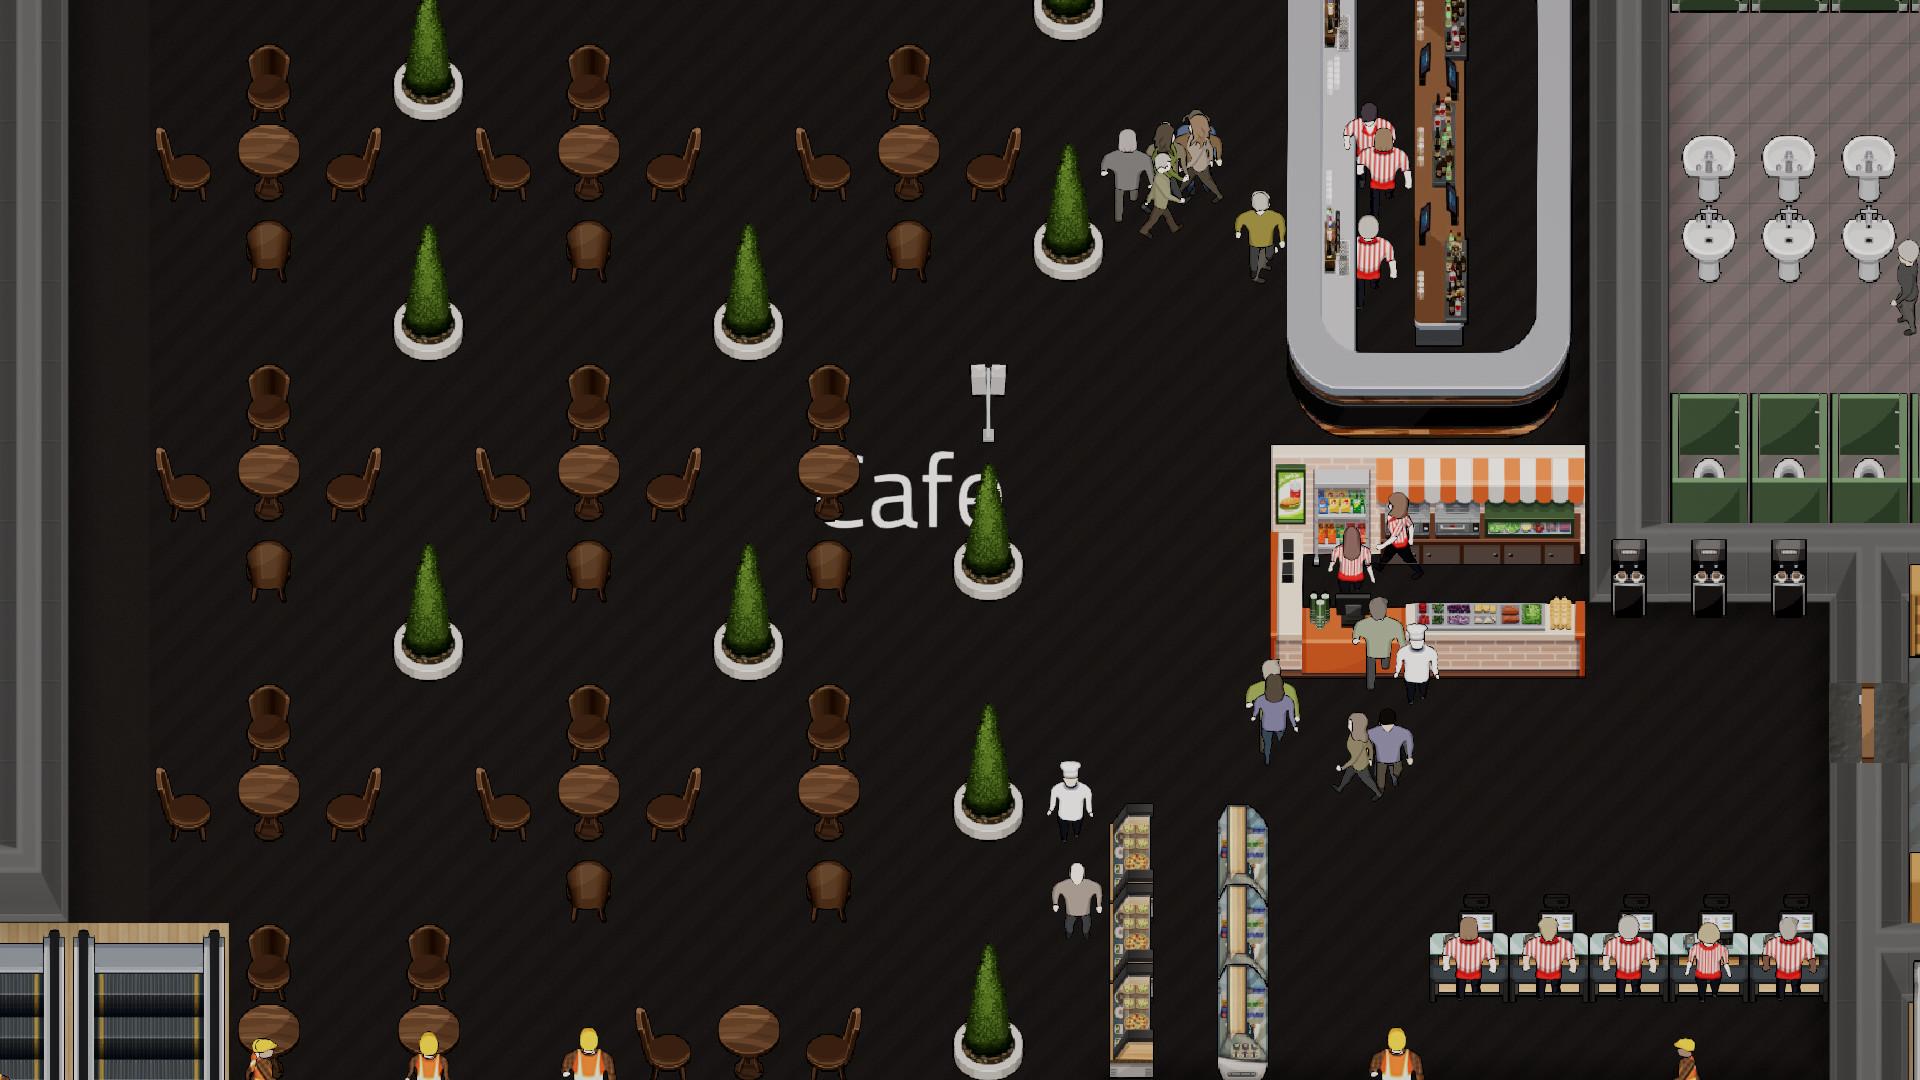 Screenshot №7 from game SimAirport